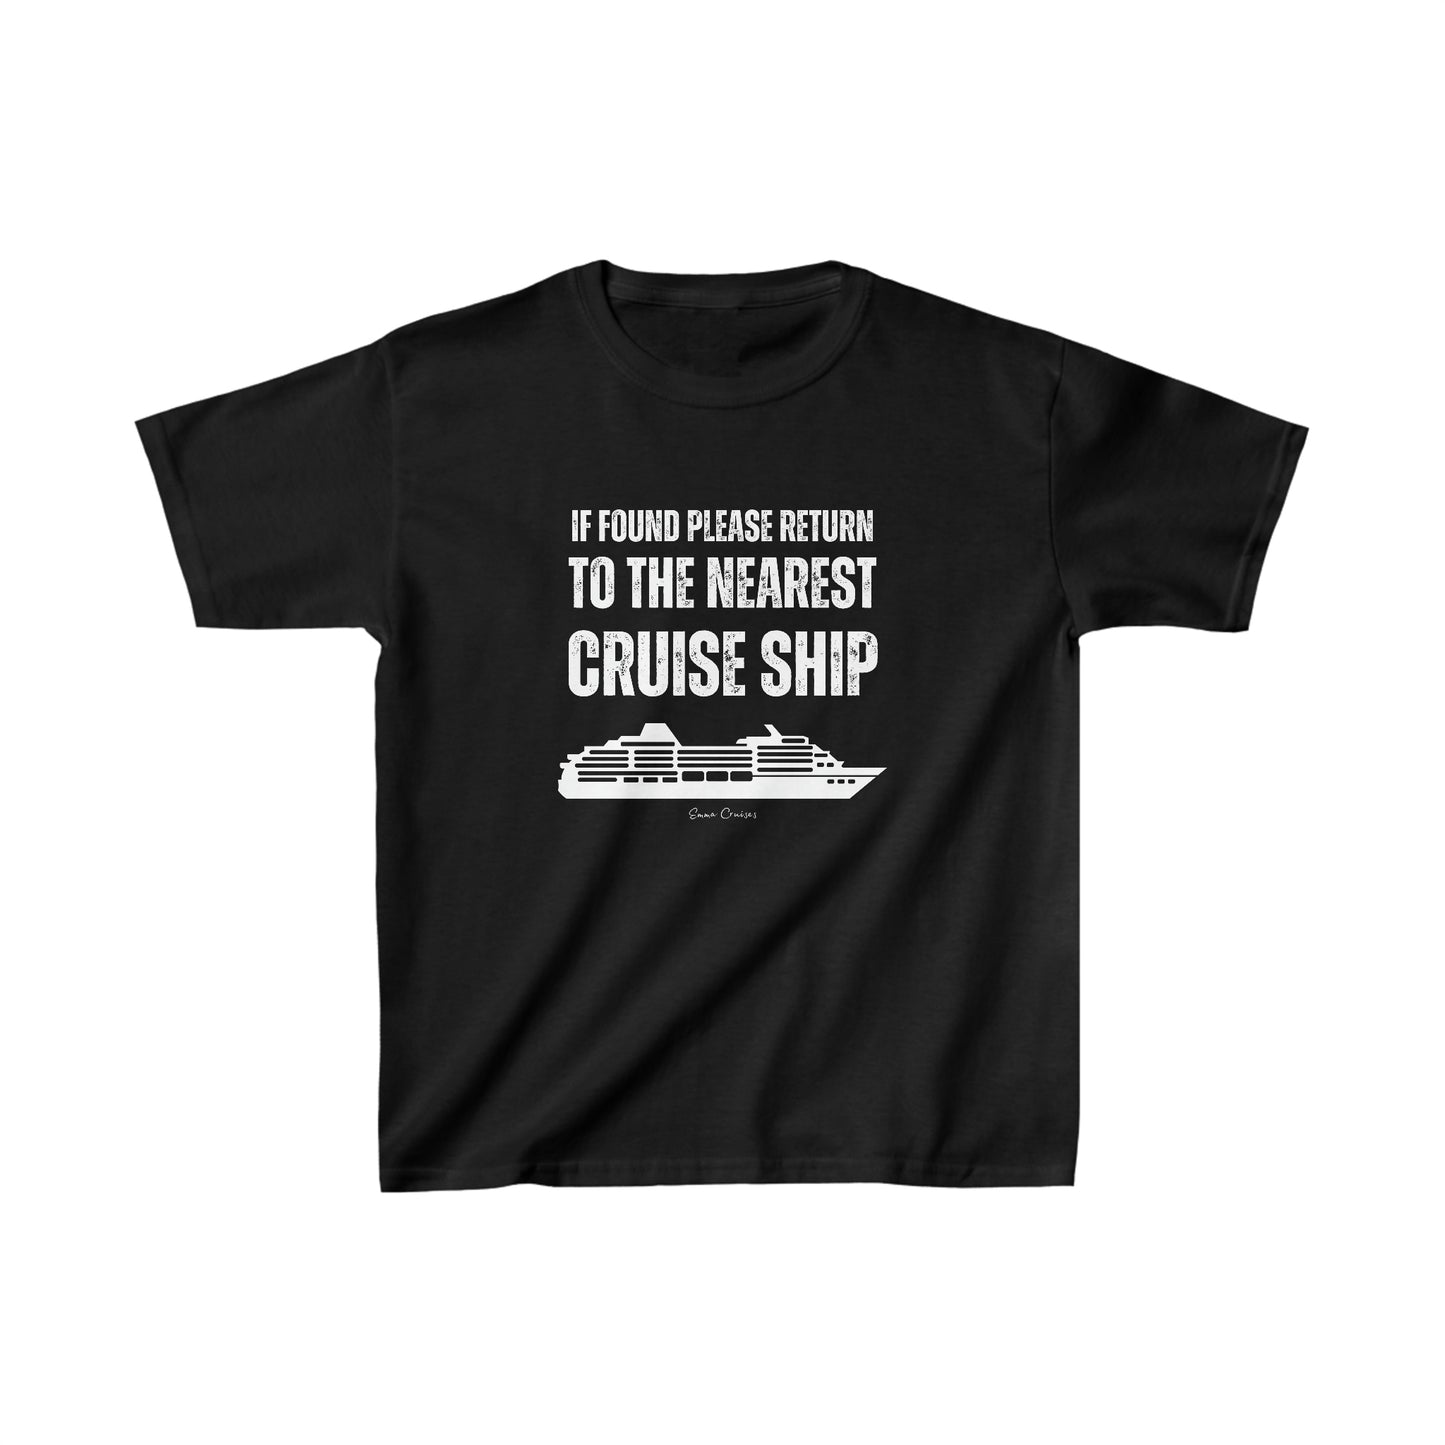 Return to Cruise Ship - Kids UNISEX T-Shirt